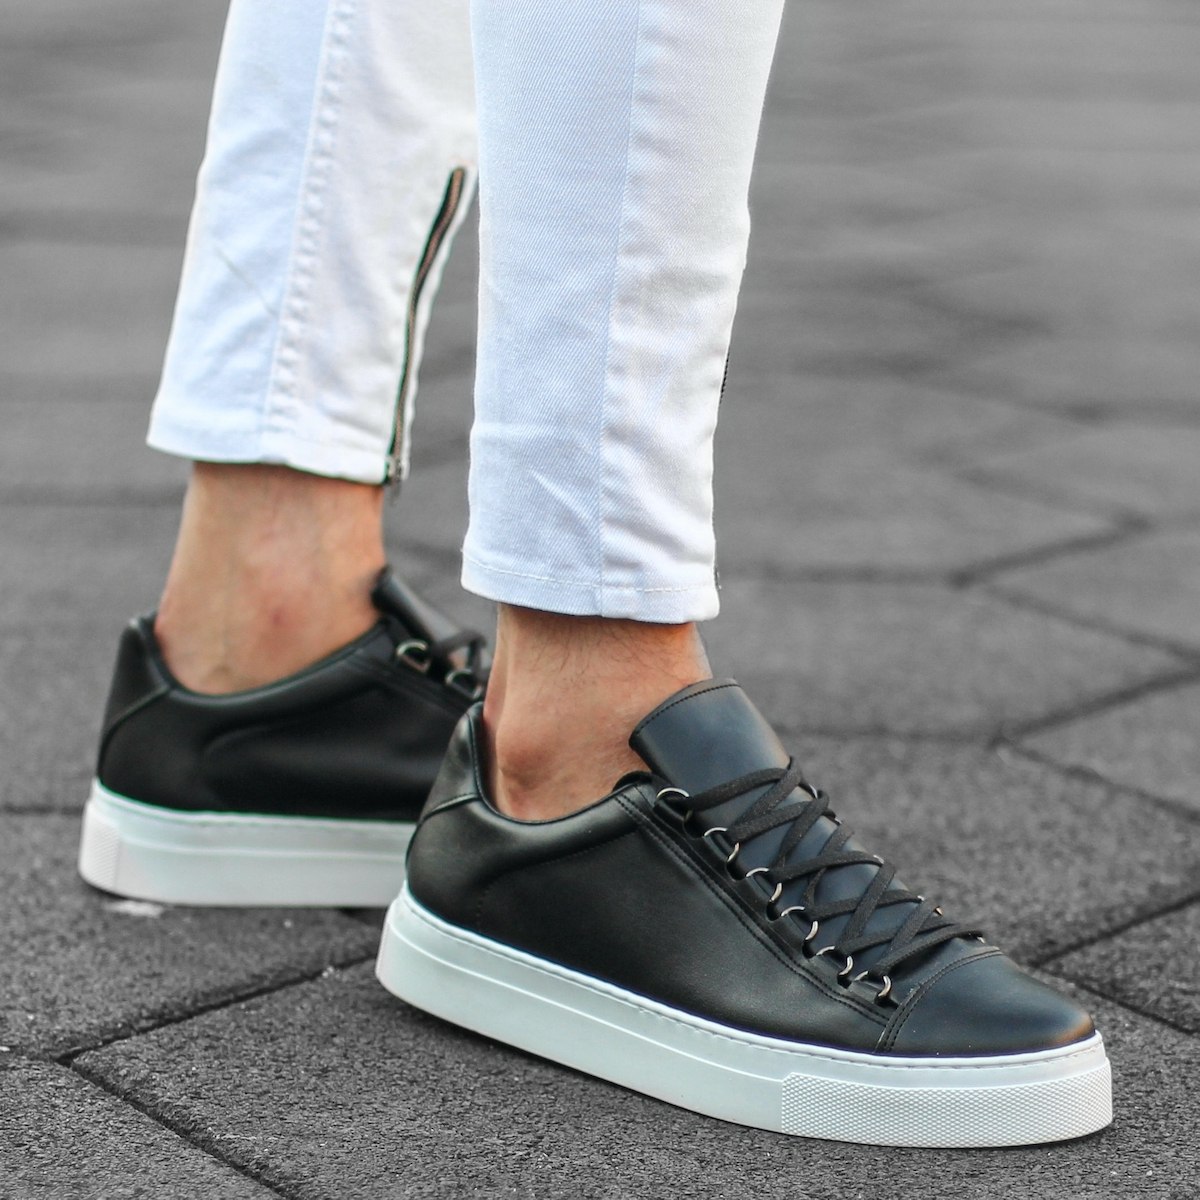 Men’s Low Top Outdoor Sneakers Shoes Black-White | Martin Valen